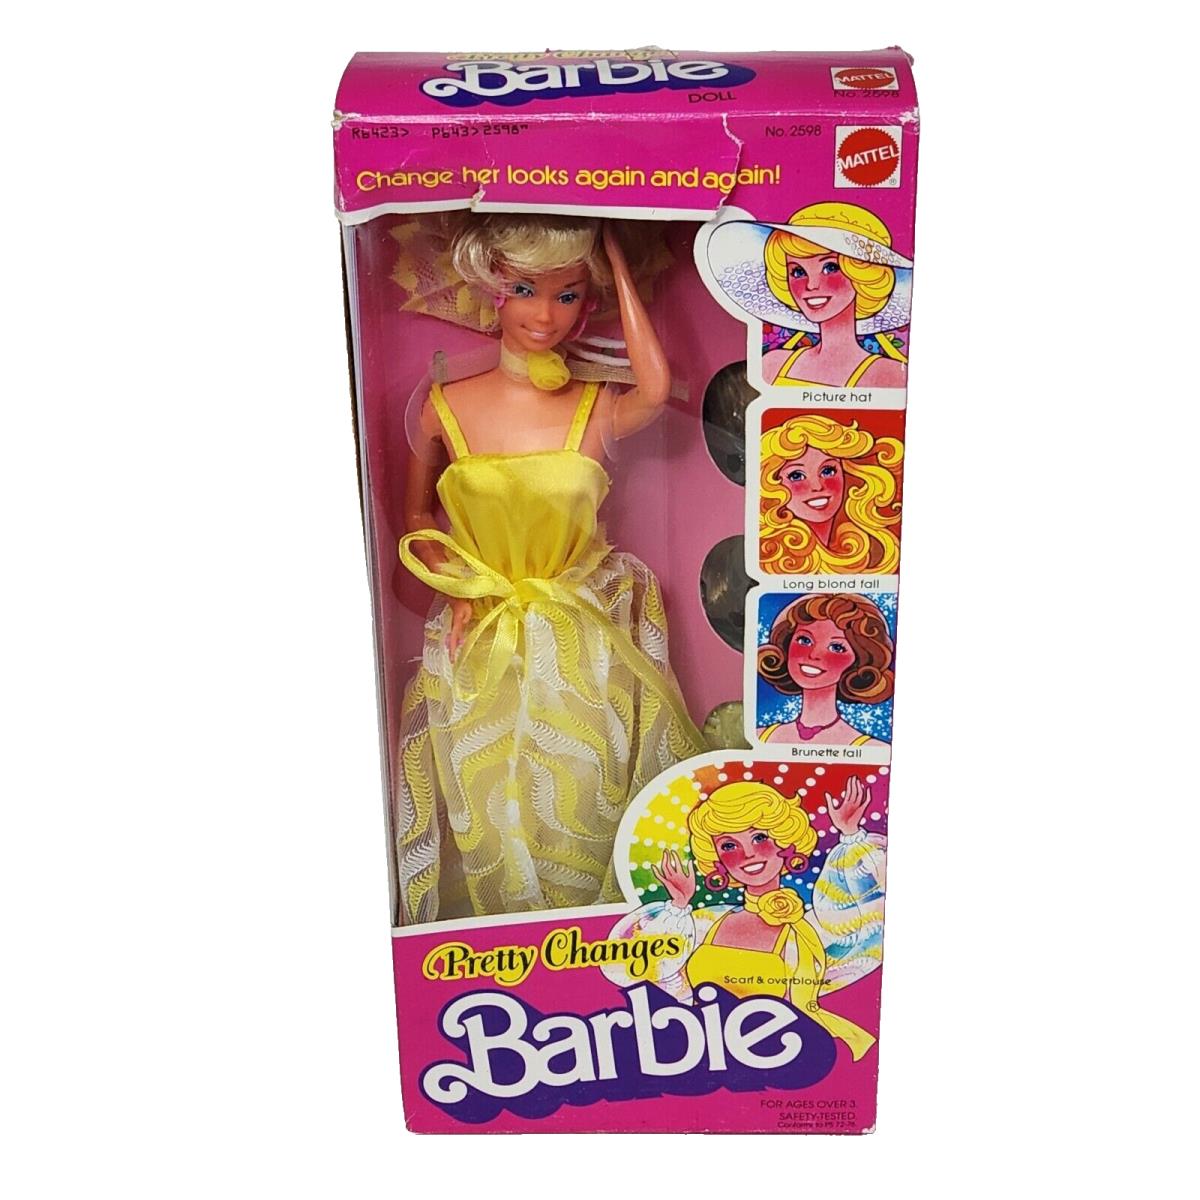 Vintage 1978 Mattel Pretty Changes Barbie Doll 2598 IN Box Nos